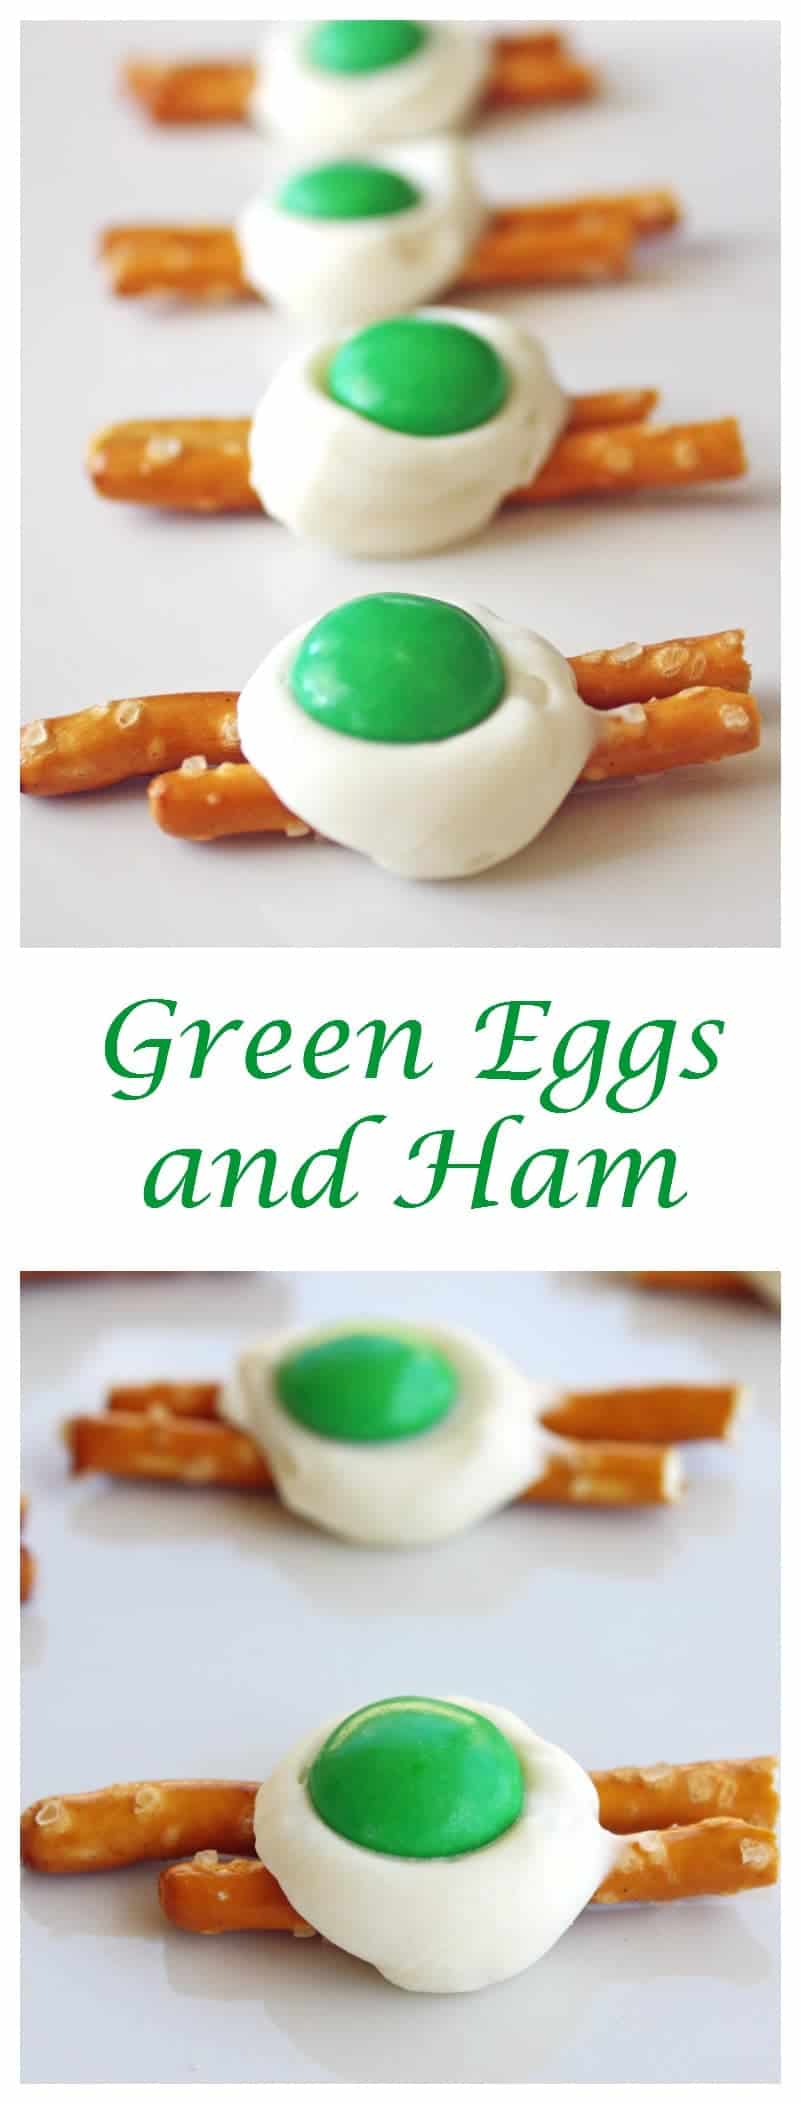 Green Eggs and Ham - great for Dr. Seuss themed school parties. #drseuss #preschool #treats #greeneggsandham